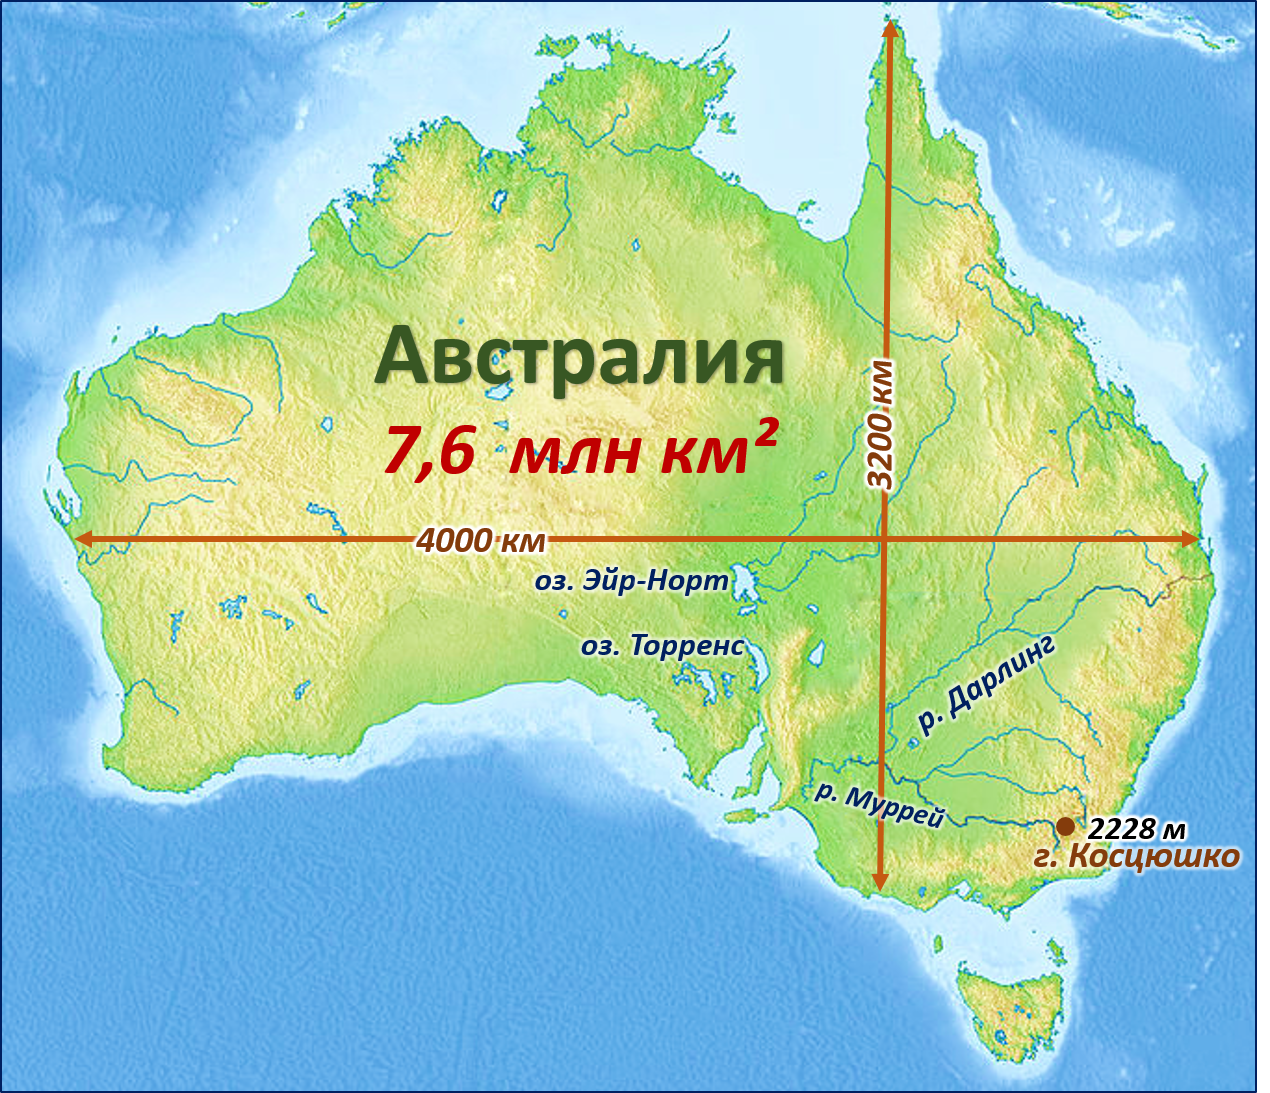 Гора Костюшко на карте Австралии. Пик Косцюшко Австралия. Озеро Эйр-Норт на карте Австралии. Гора Косцюшко в Австралии на карте. Крупнейшие реки и озера материка австралии